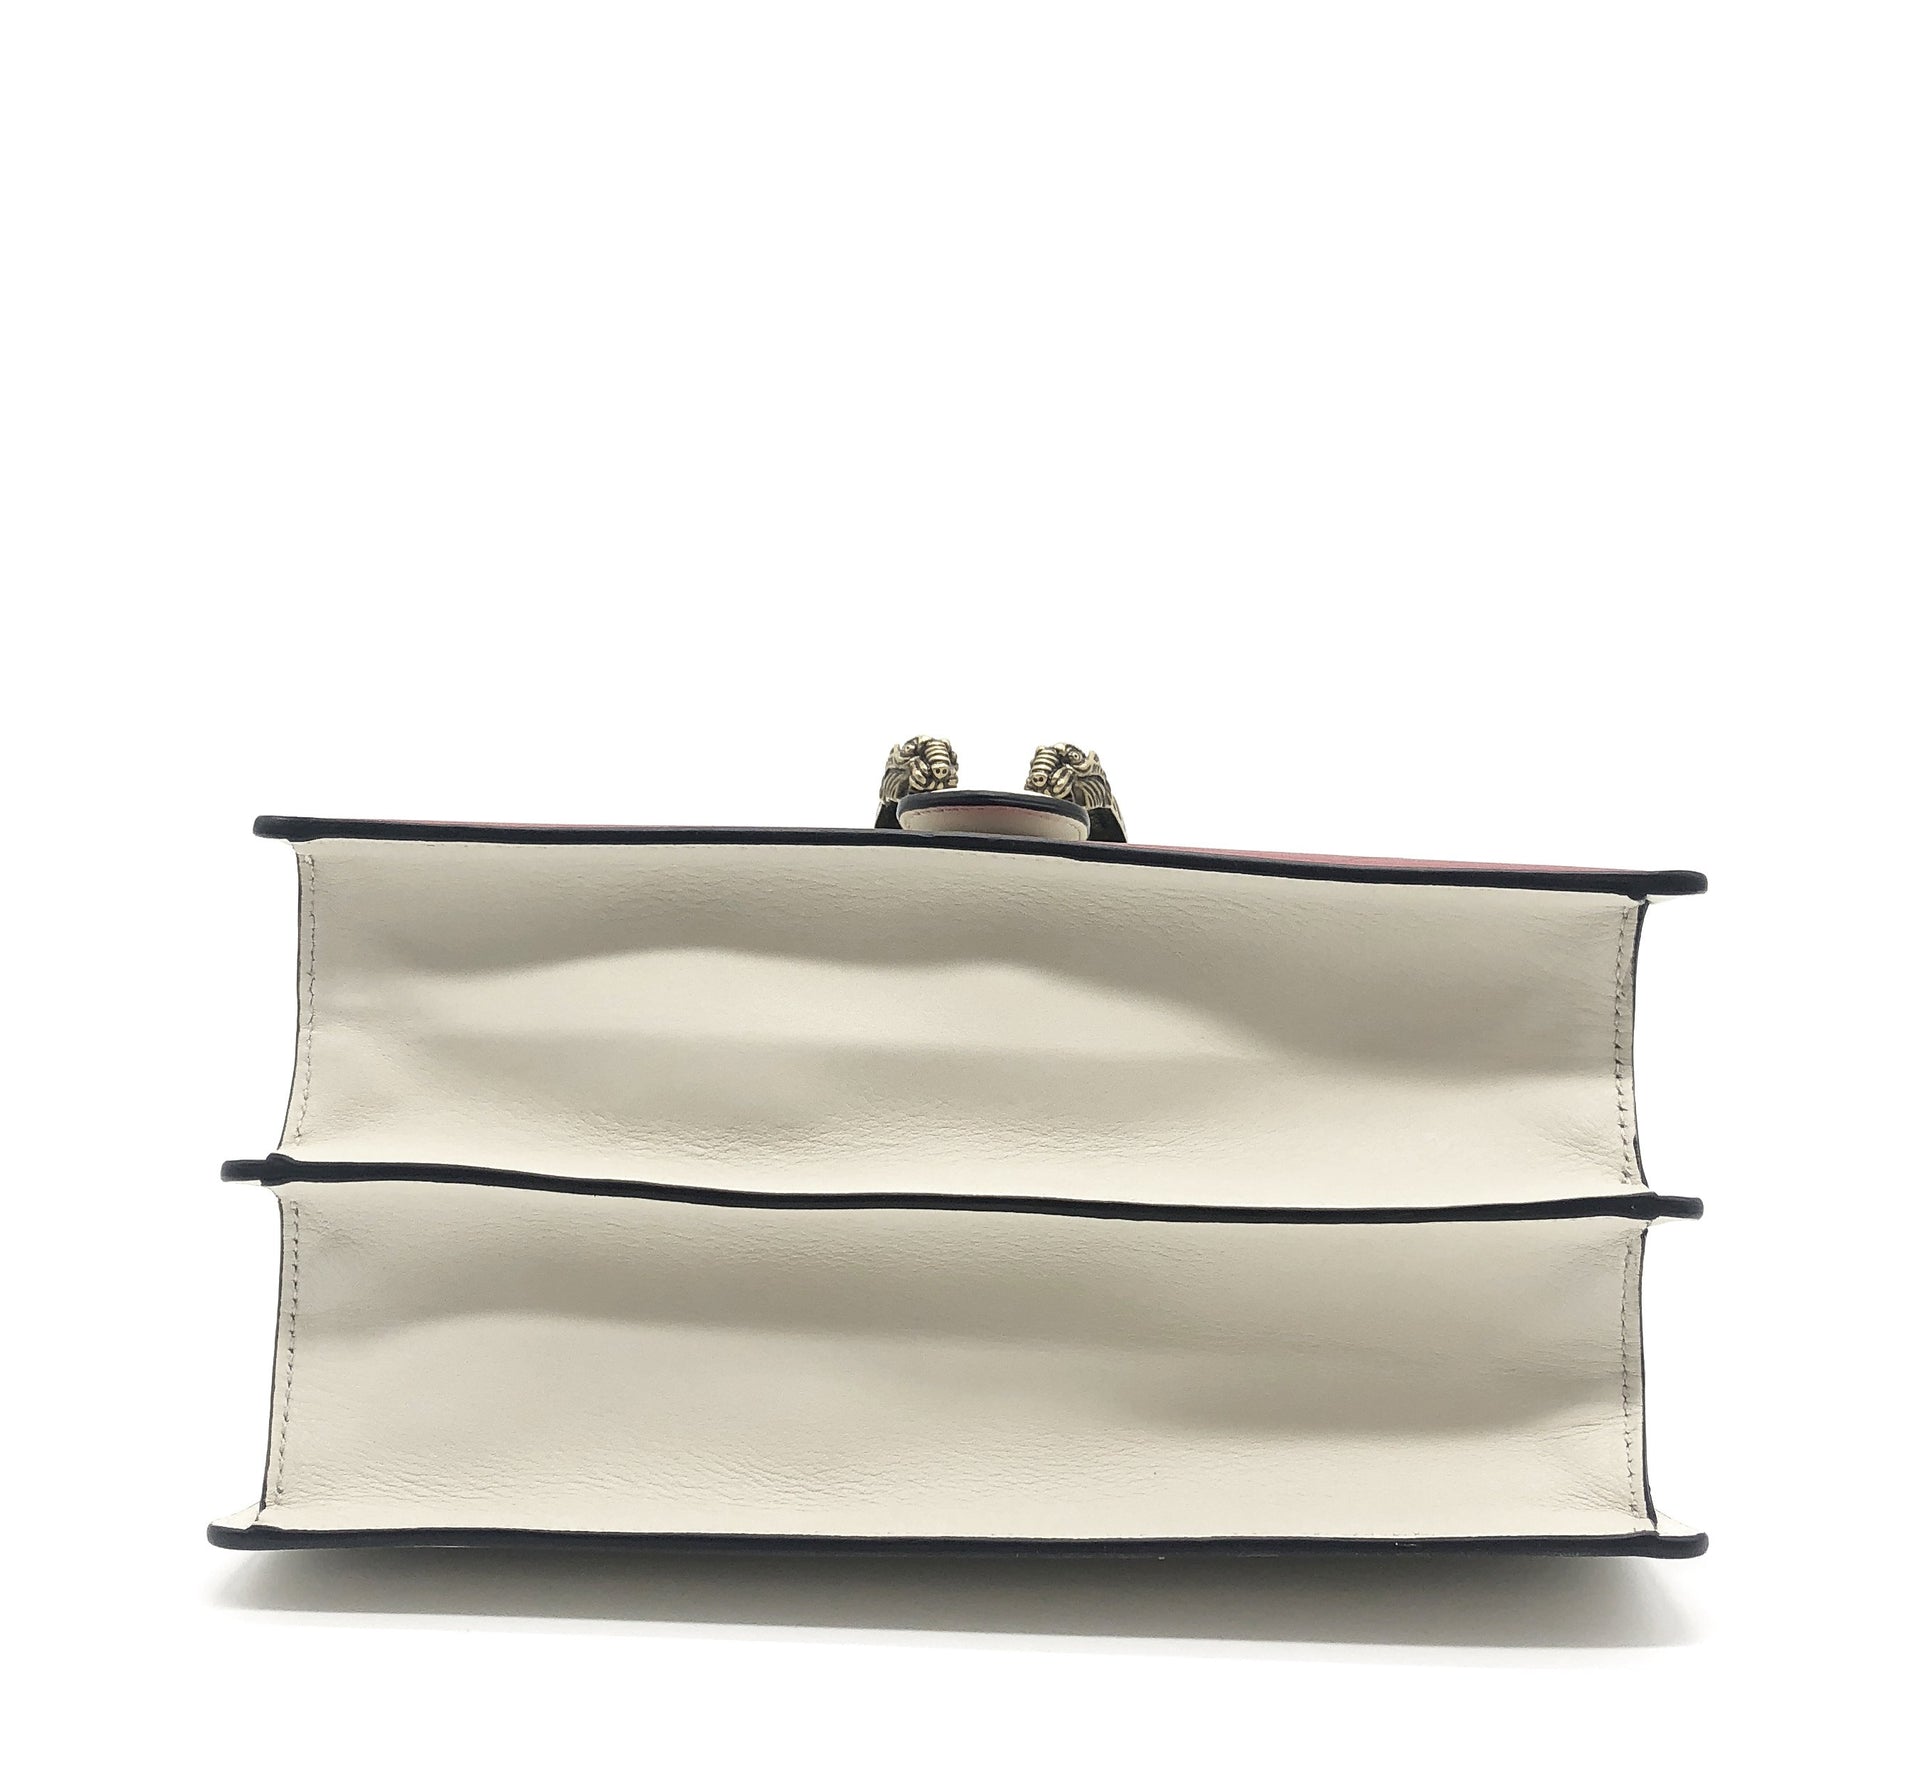 Gucci Dionysus medium top handle bag